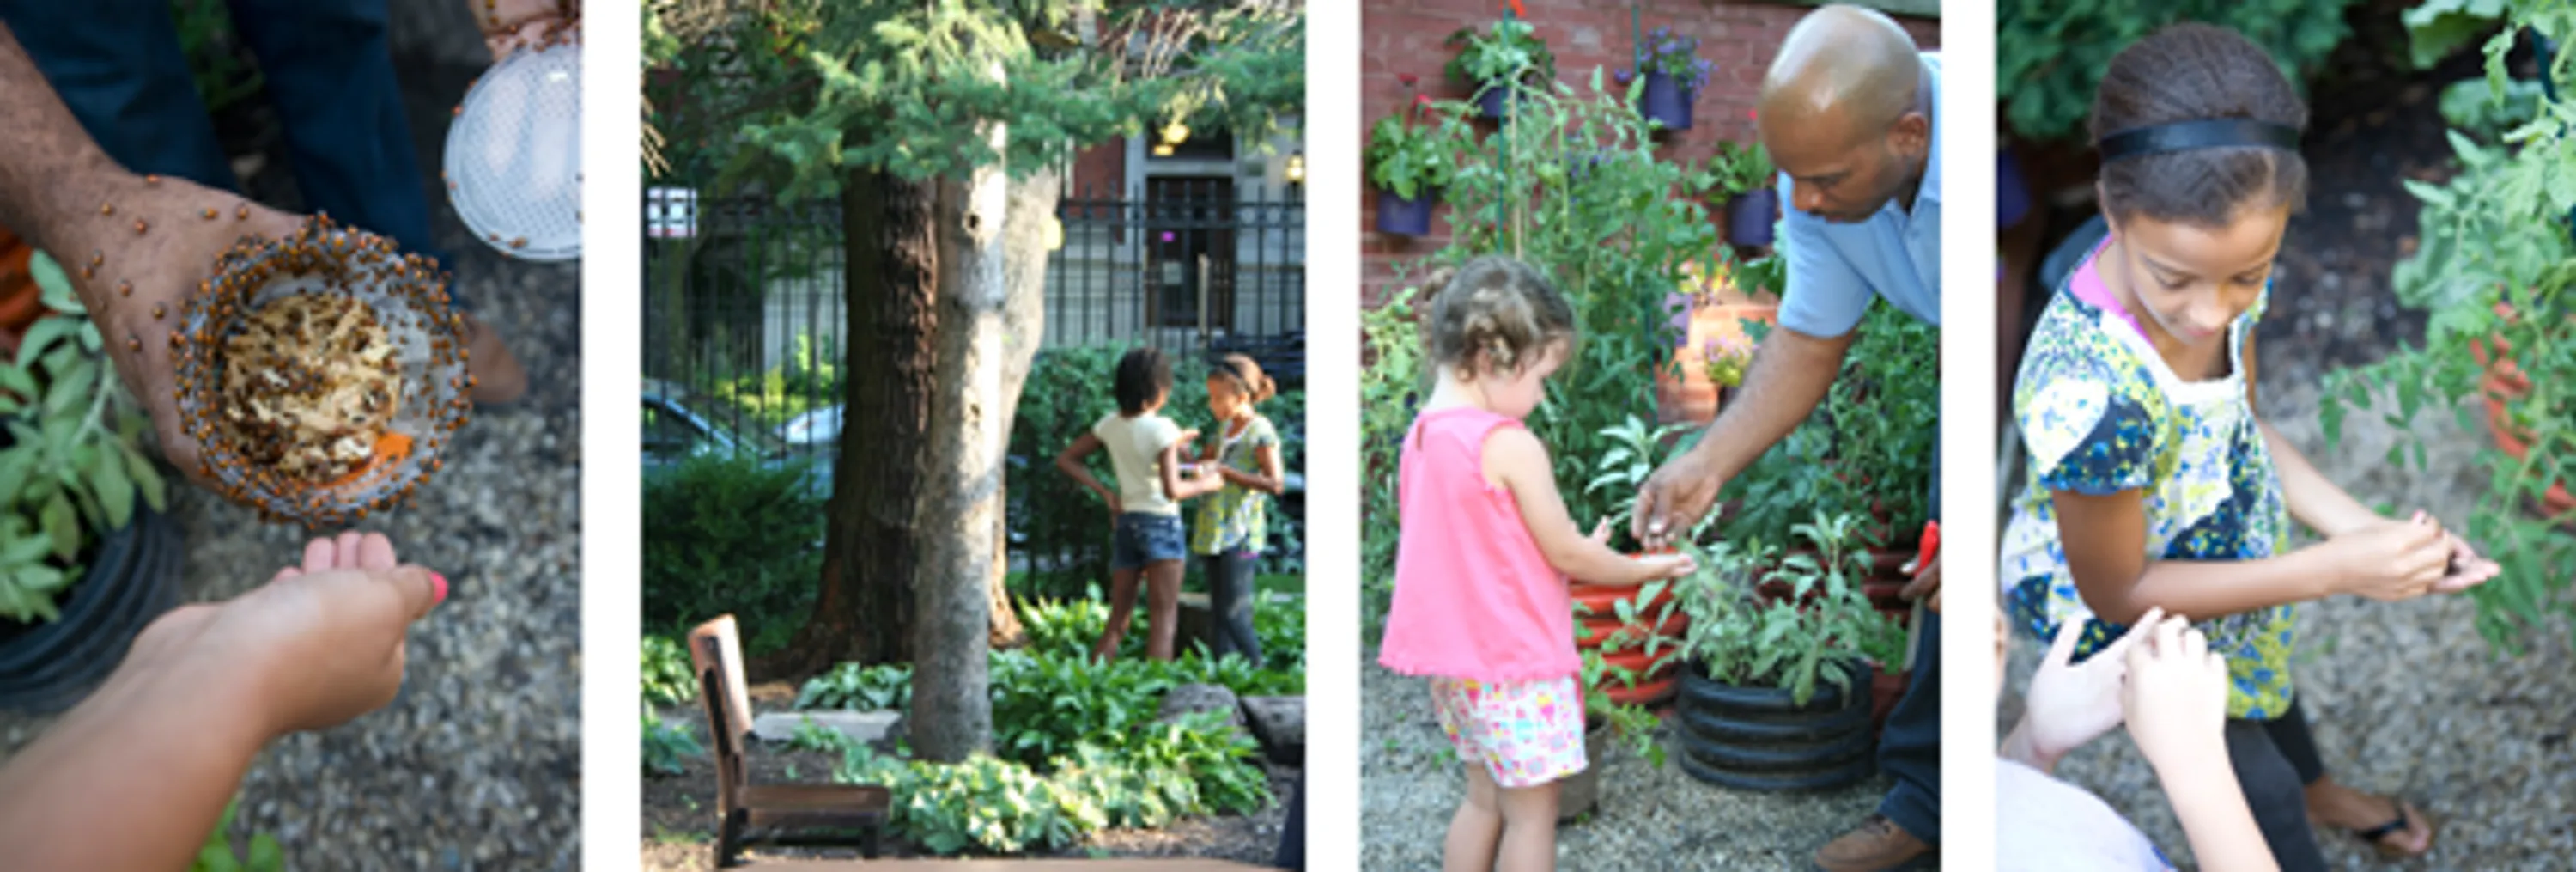 5 spal kids gardening earth designing urban gardens blog hoerrschaudt